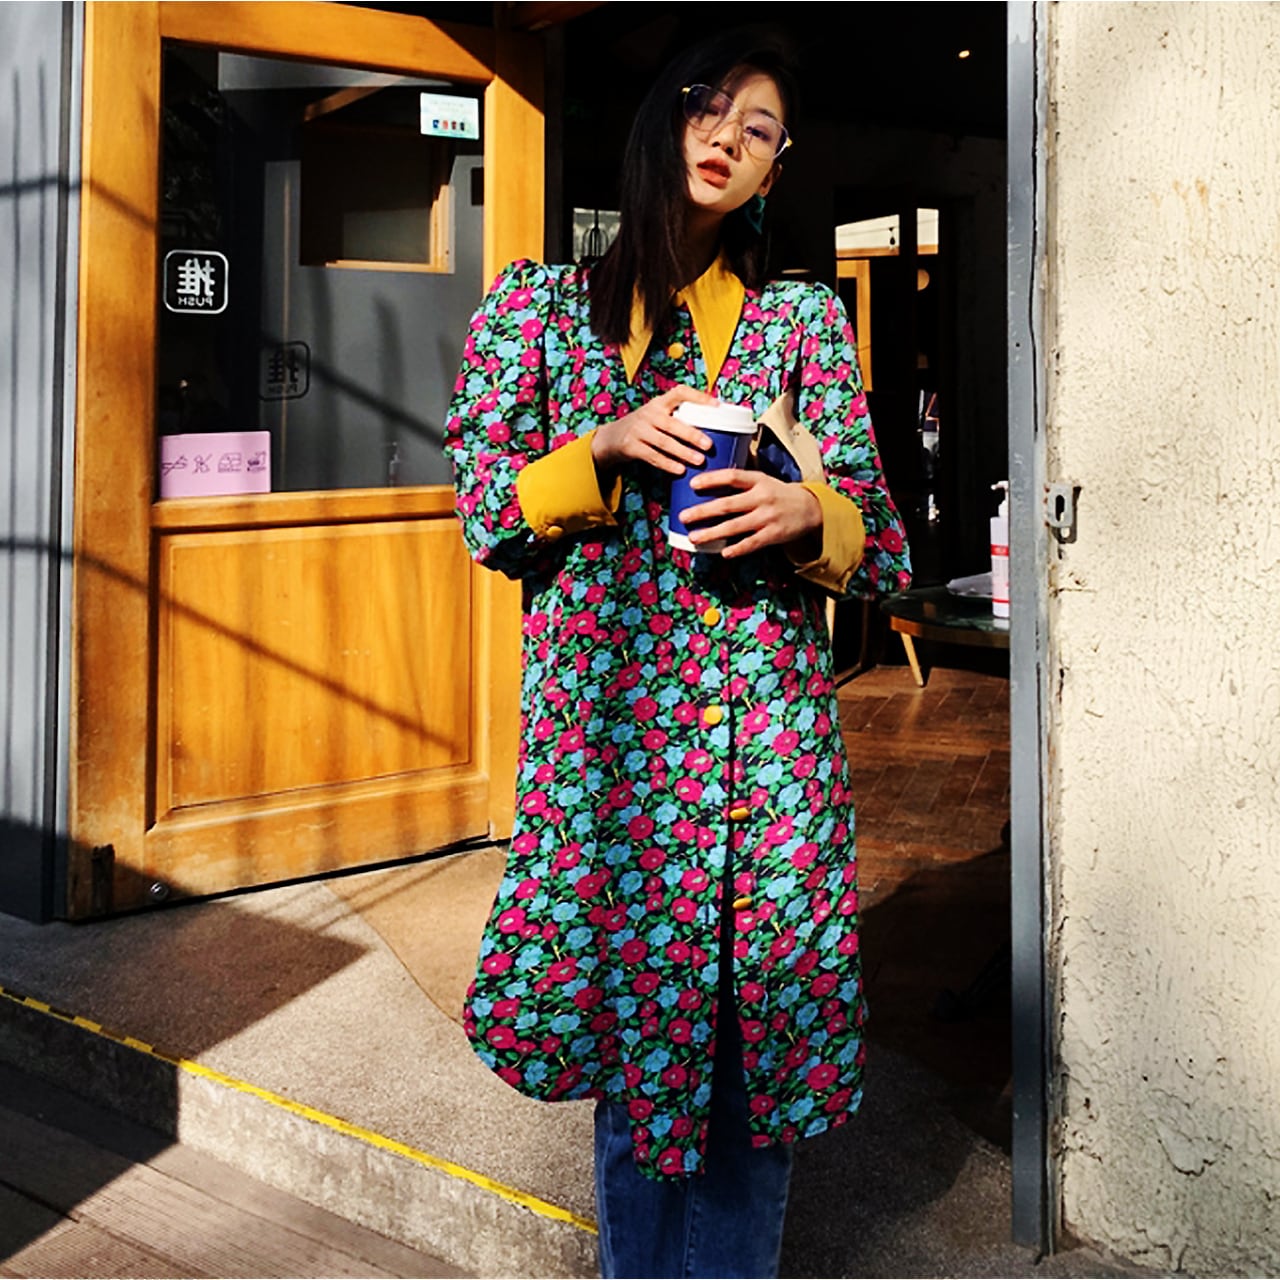 Regit 即納 Floral Leather One Piece Shirt 韓国ファッション ユニークファッション ワンピース 花柄ワンピース 長袖 代 着回し レーディス 春服 ロングシャツ レトロ Regit